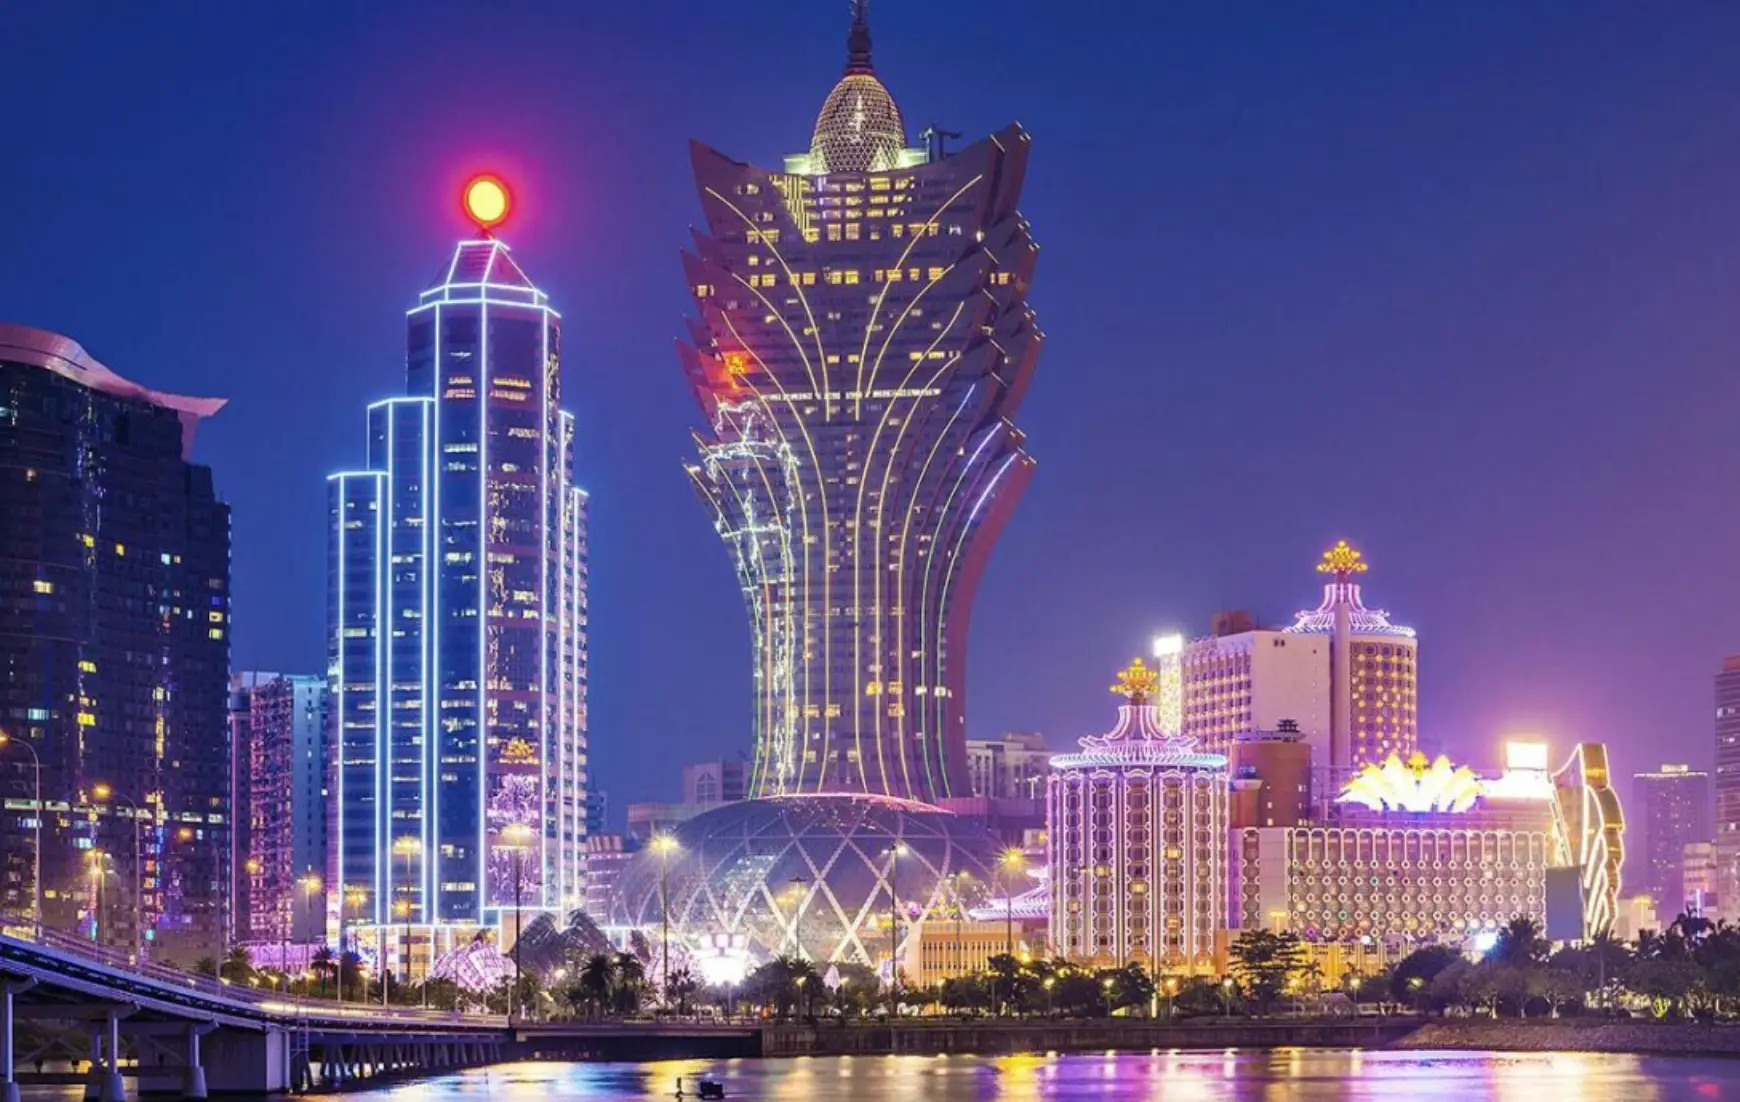 High gaming revenues in Macau Casinos